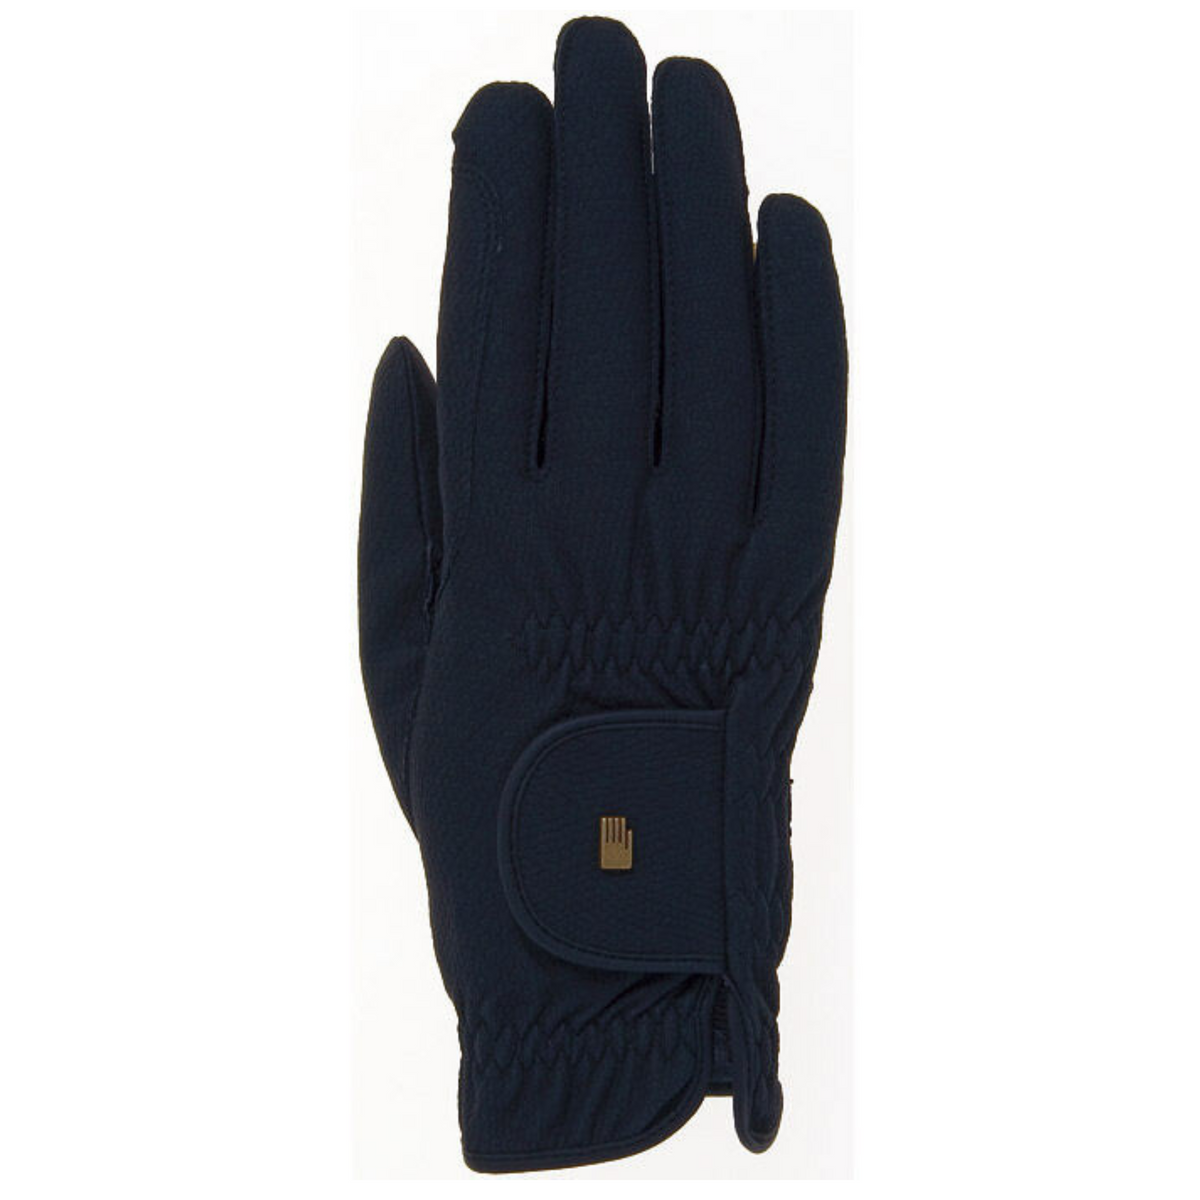 Black riding gloves